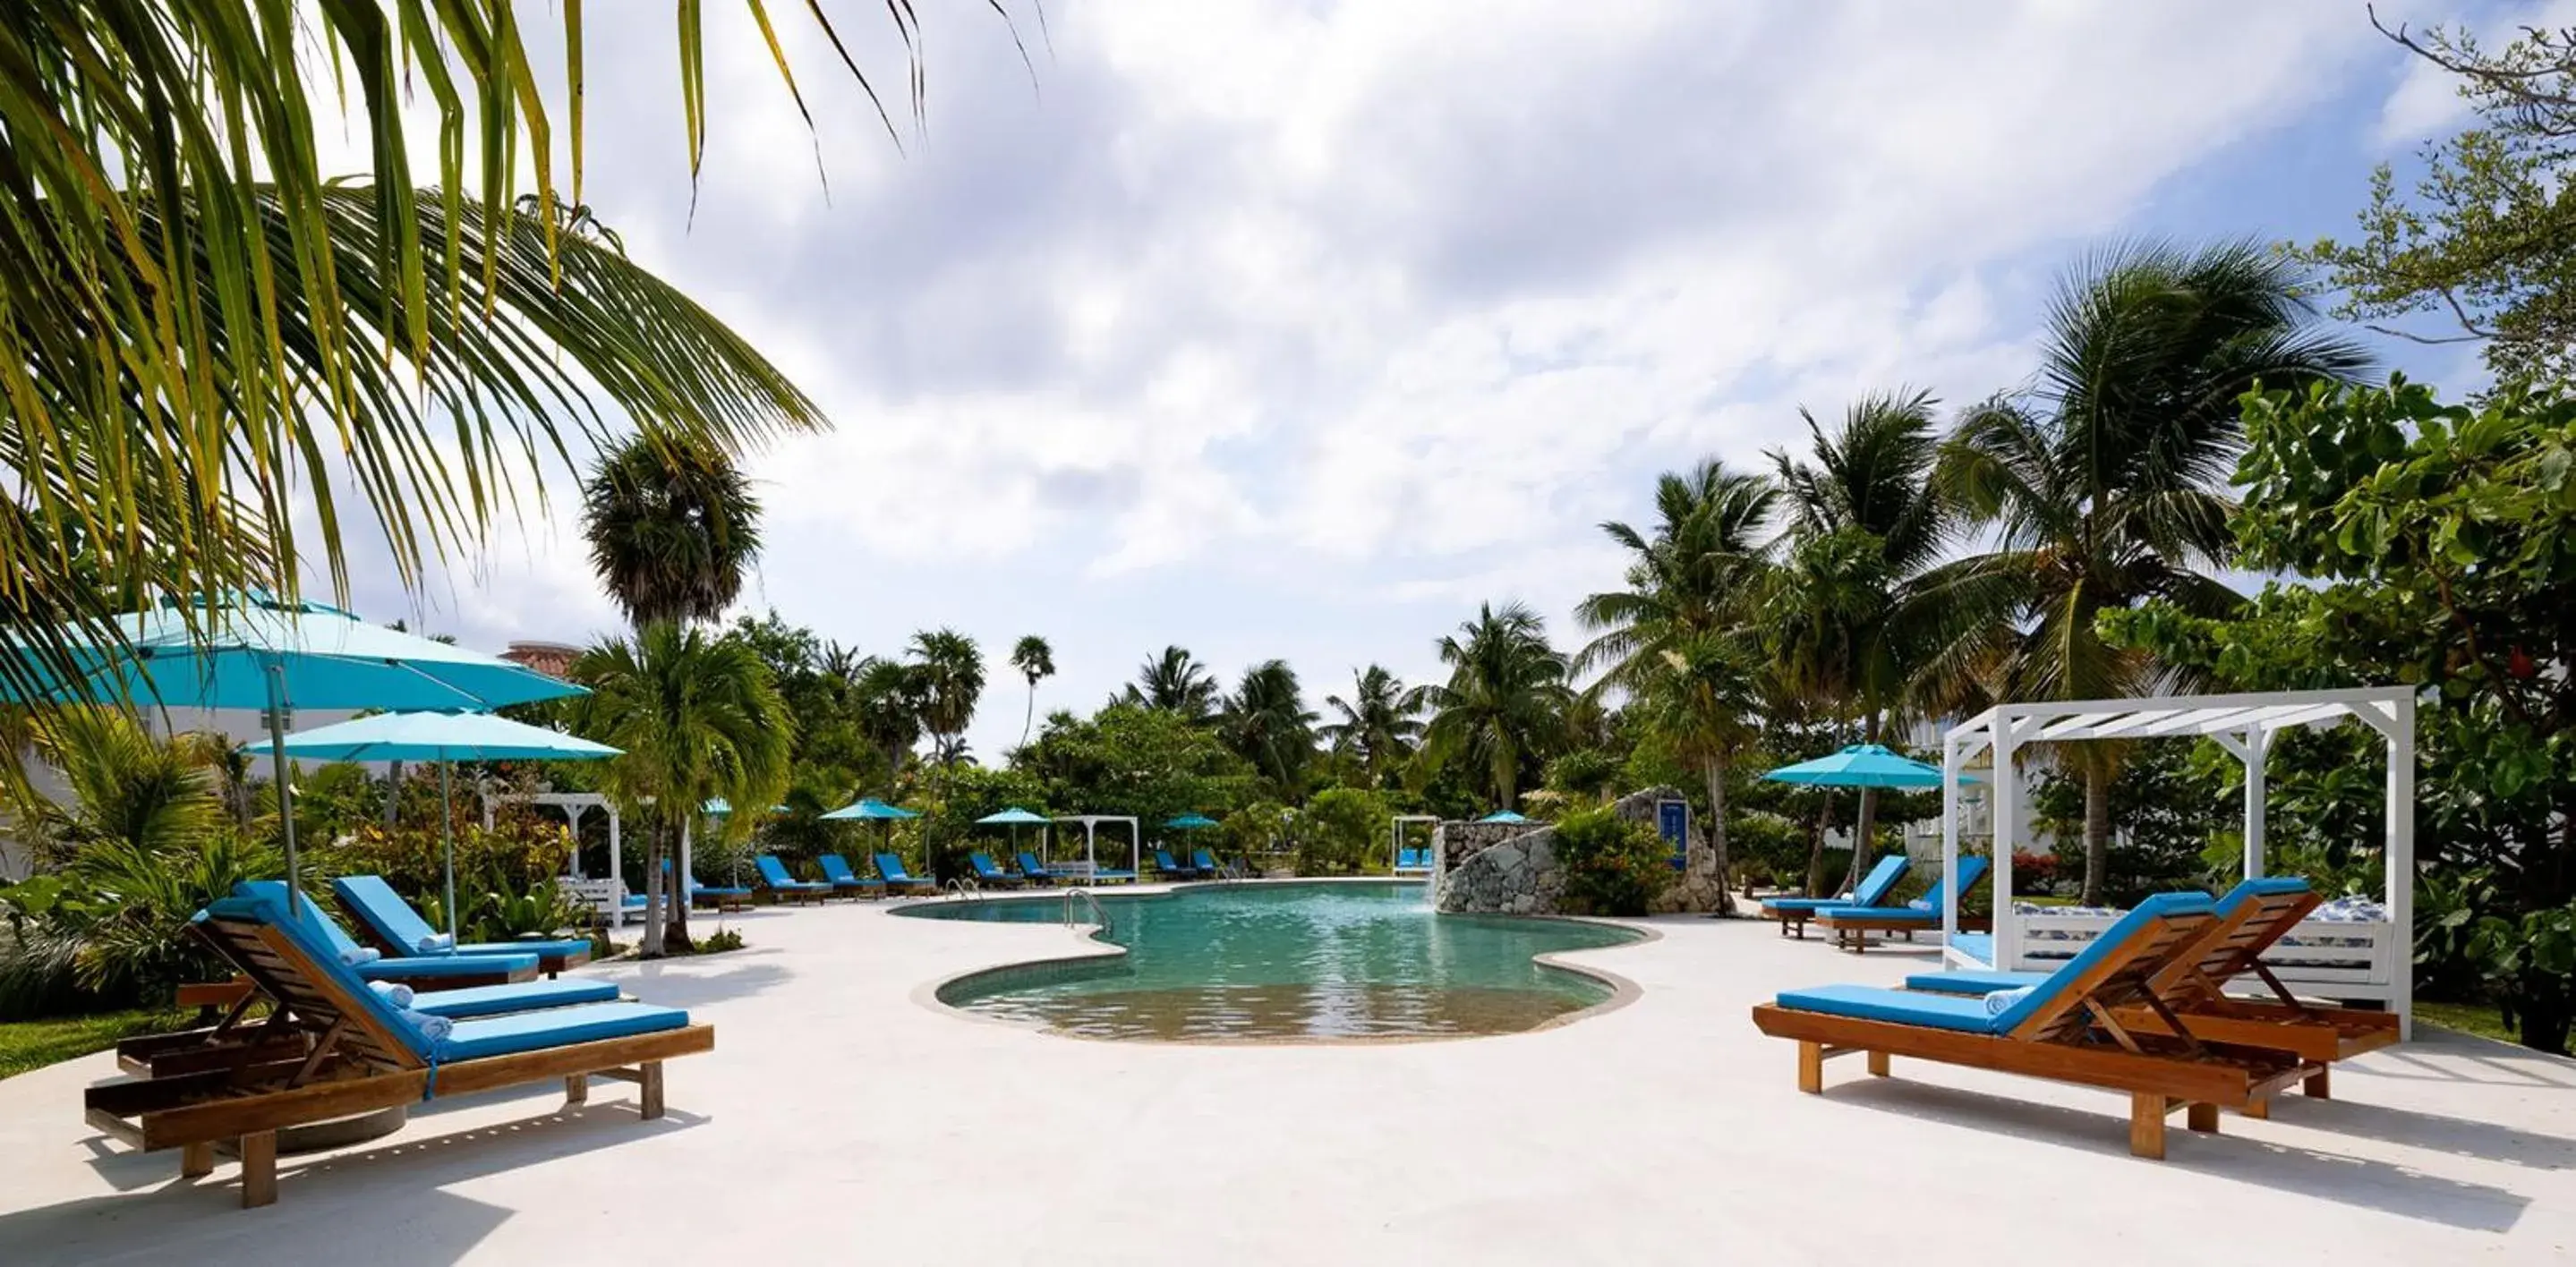 Swimming Pool in Margaritaville Beach Resort Ambergris Caye - Belize